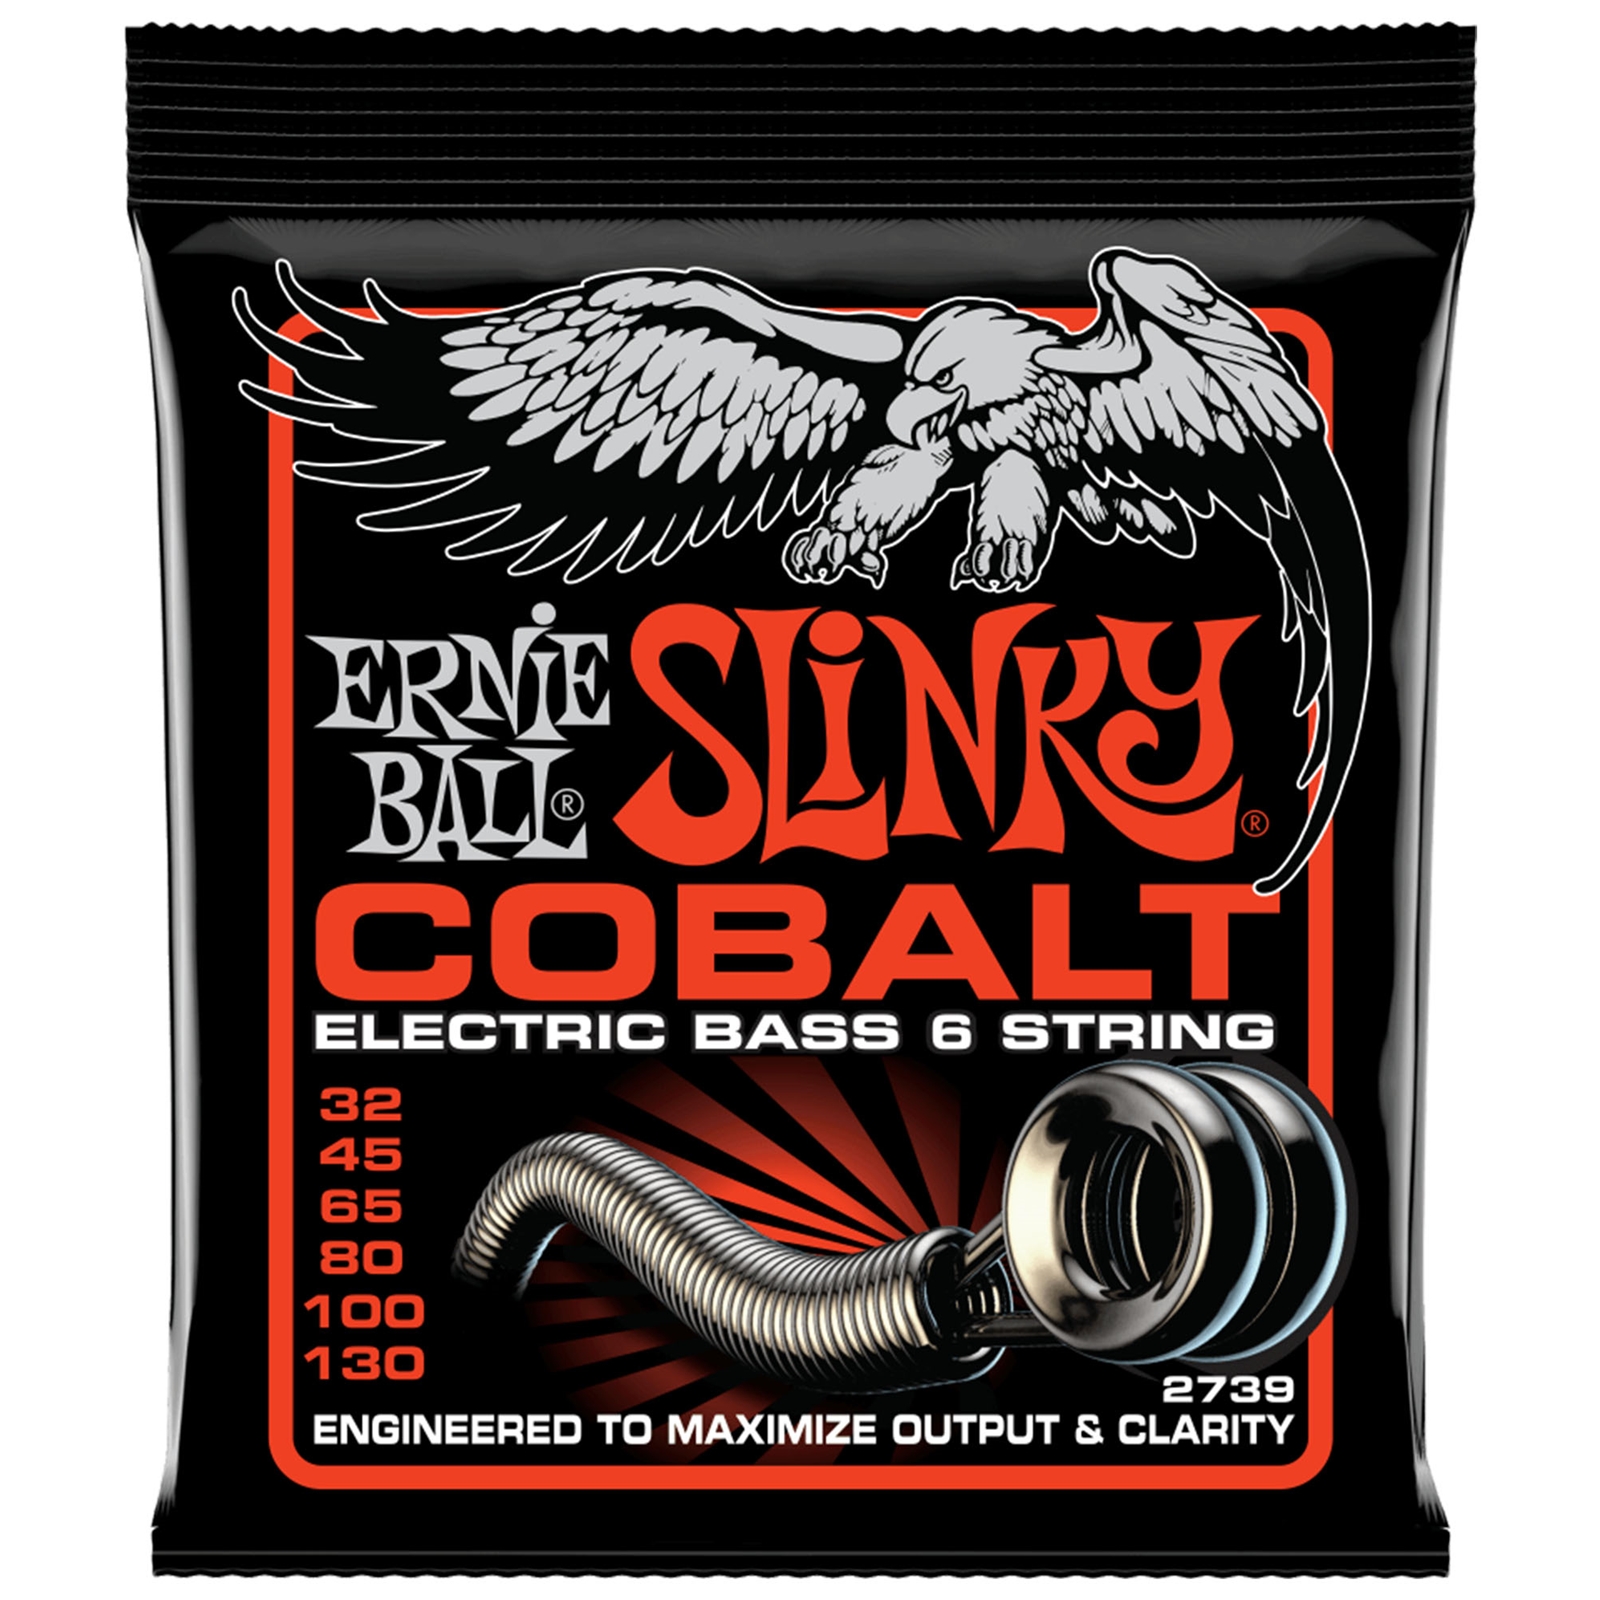 Ernie Ball Slinky Cobalt 6-String Electric Bass Strings 32-130 Gauge